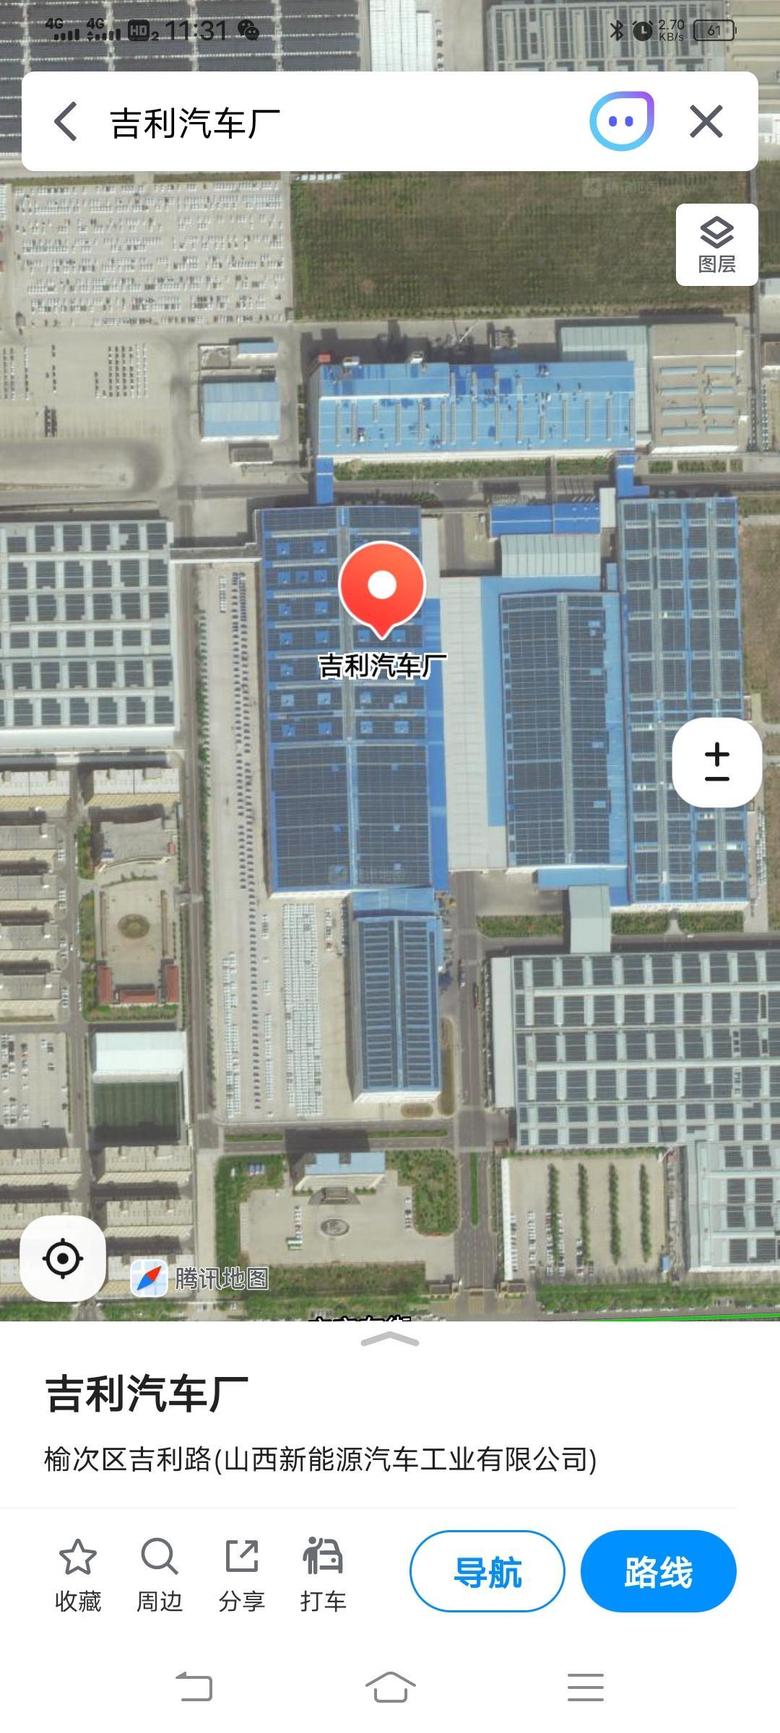 ex3 功夫牛 腾讯地图卫星图查了下了，不知道是不是这个工厂。3个停车区域，最多每个区域1000台，也就3000台，如果有车现在应该是满厂都是车的！！